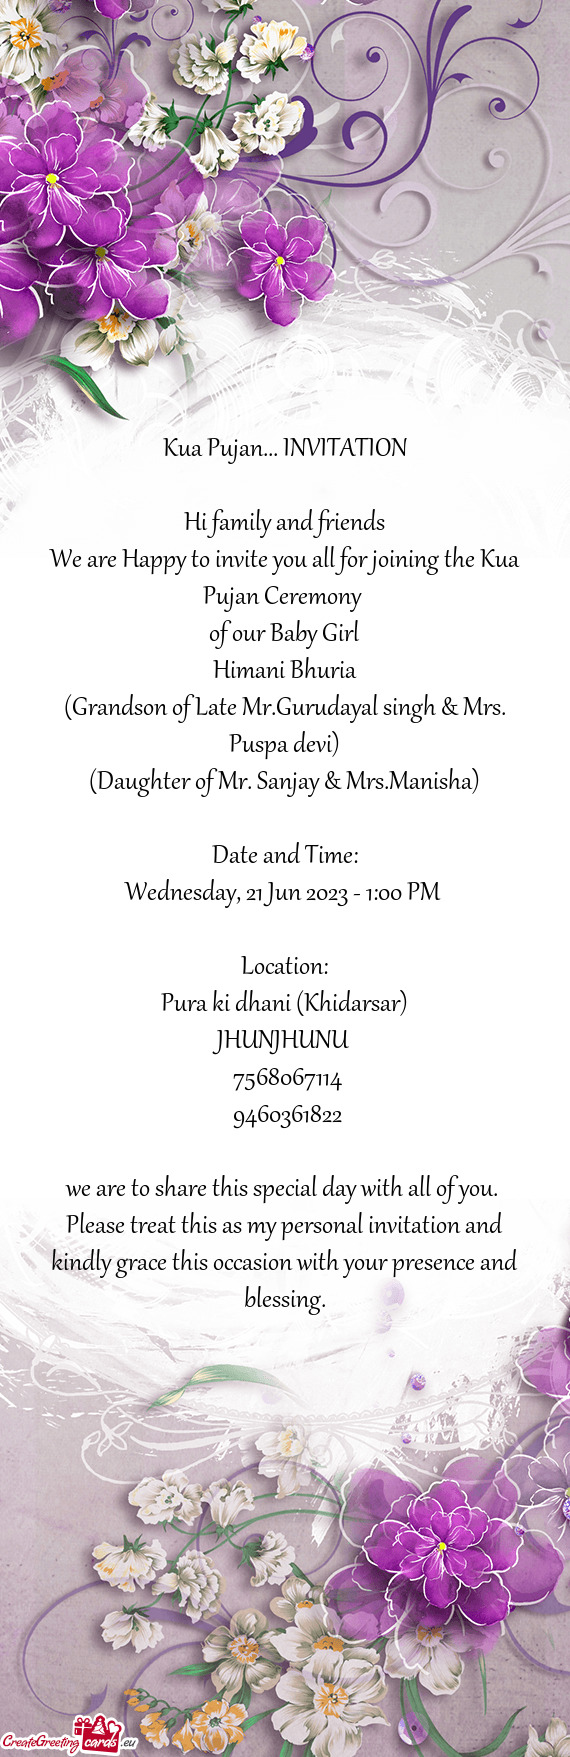 (Grandson of Late Mr.Gurudayal singh & Mrs. Puspa devi)